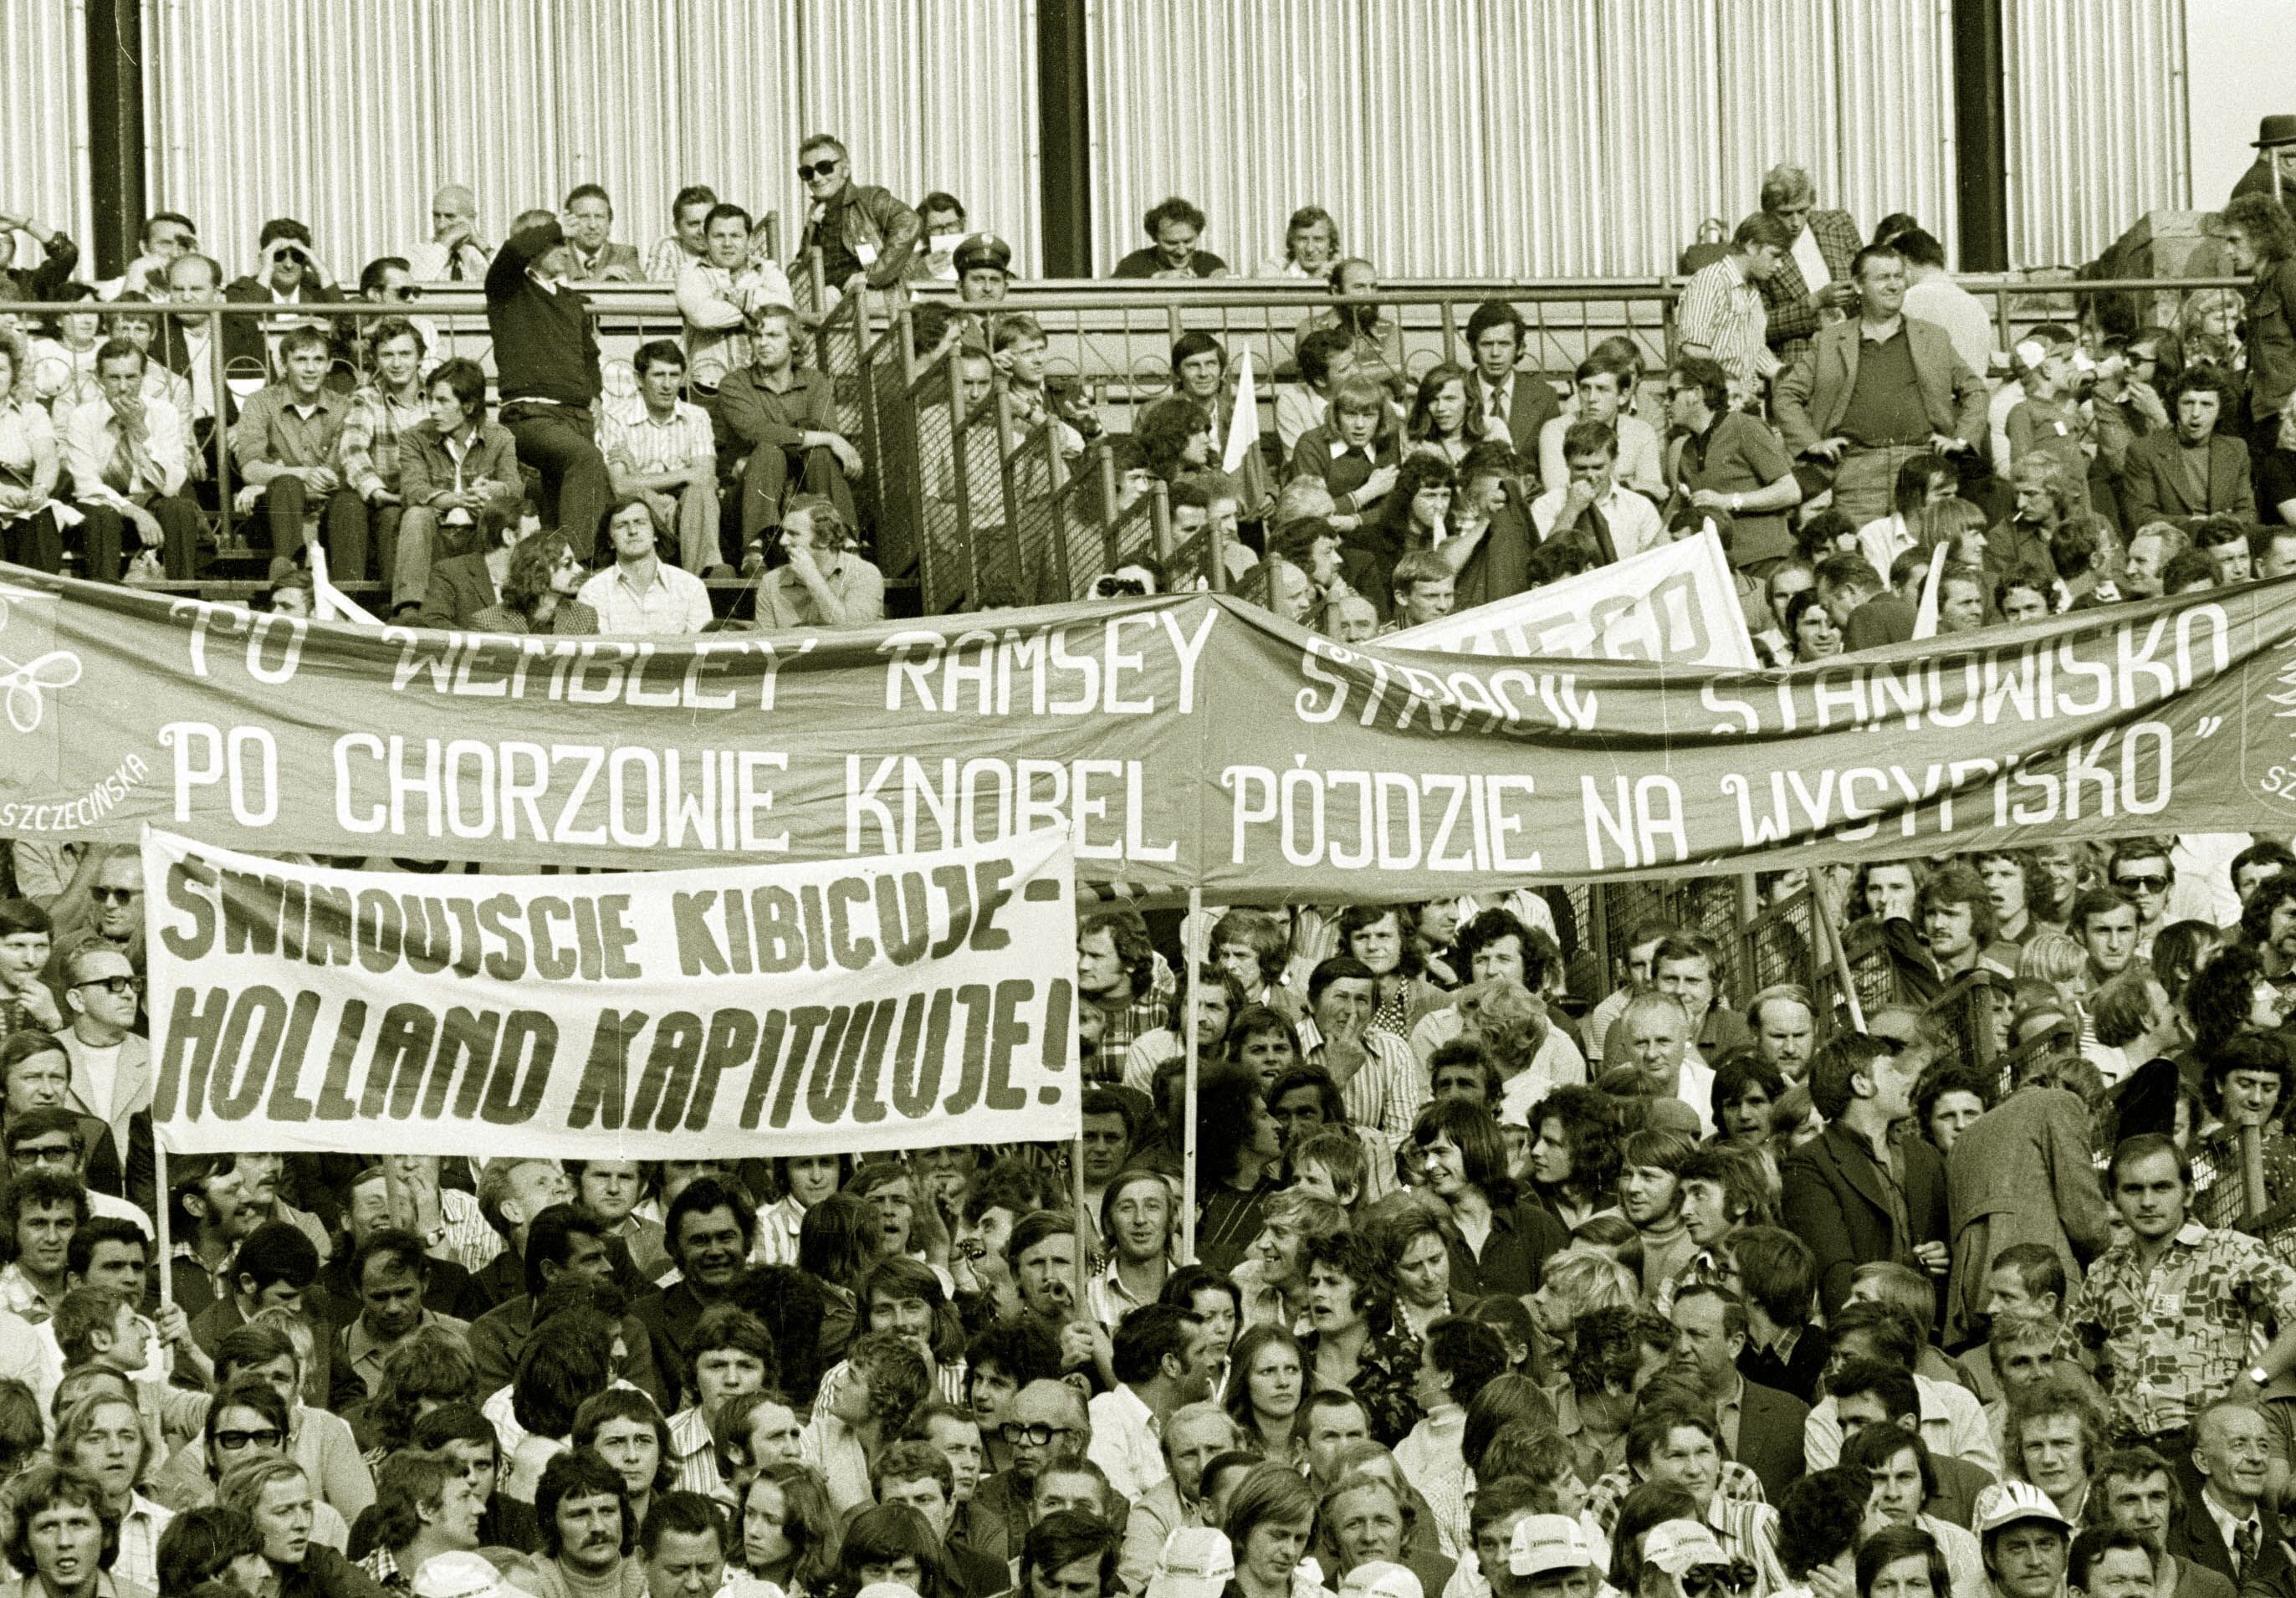 polska - holandia (10.09.1975)